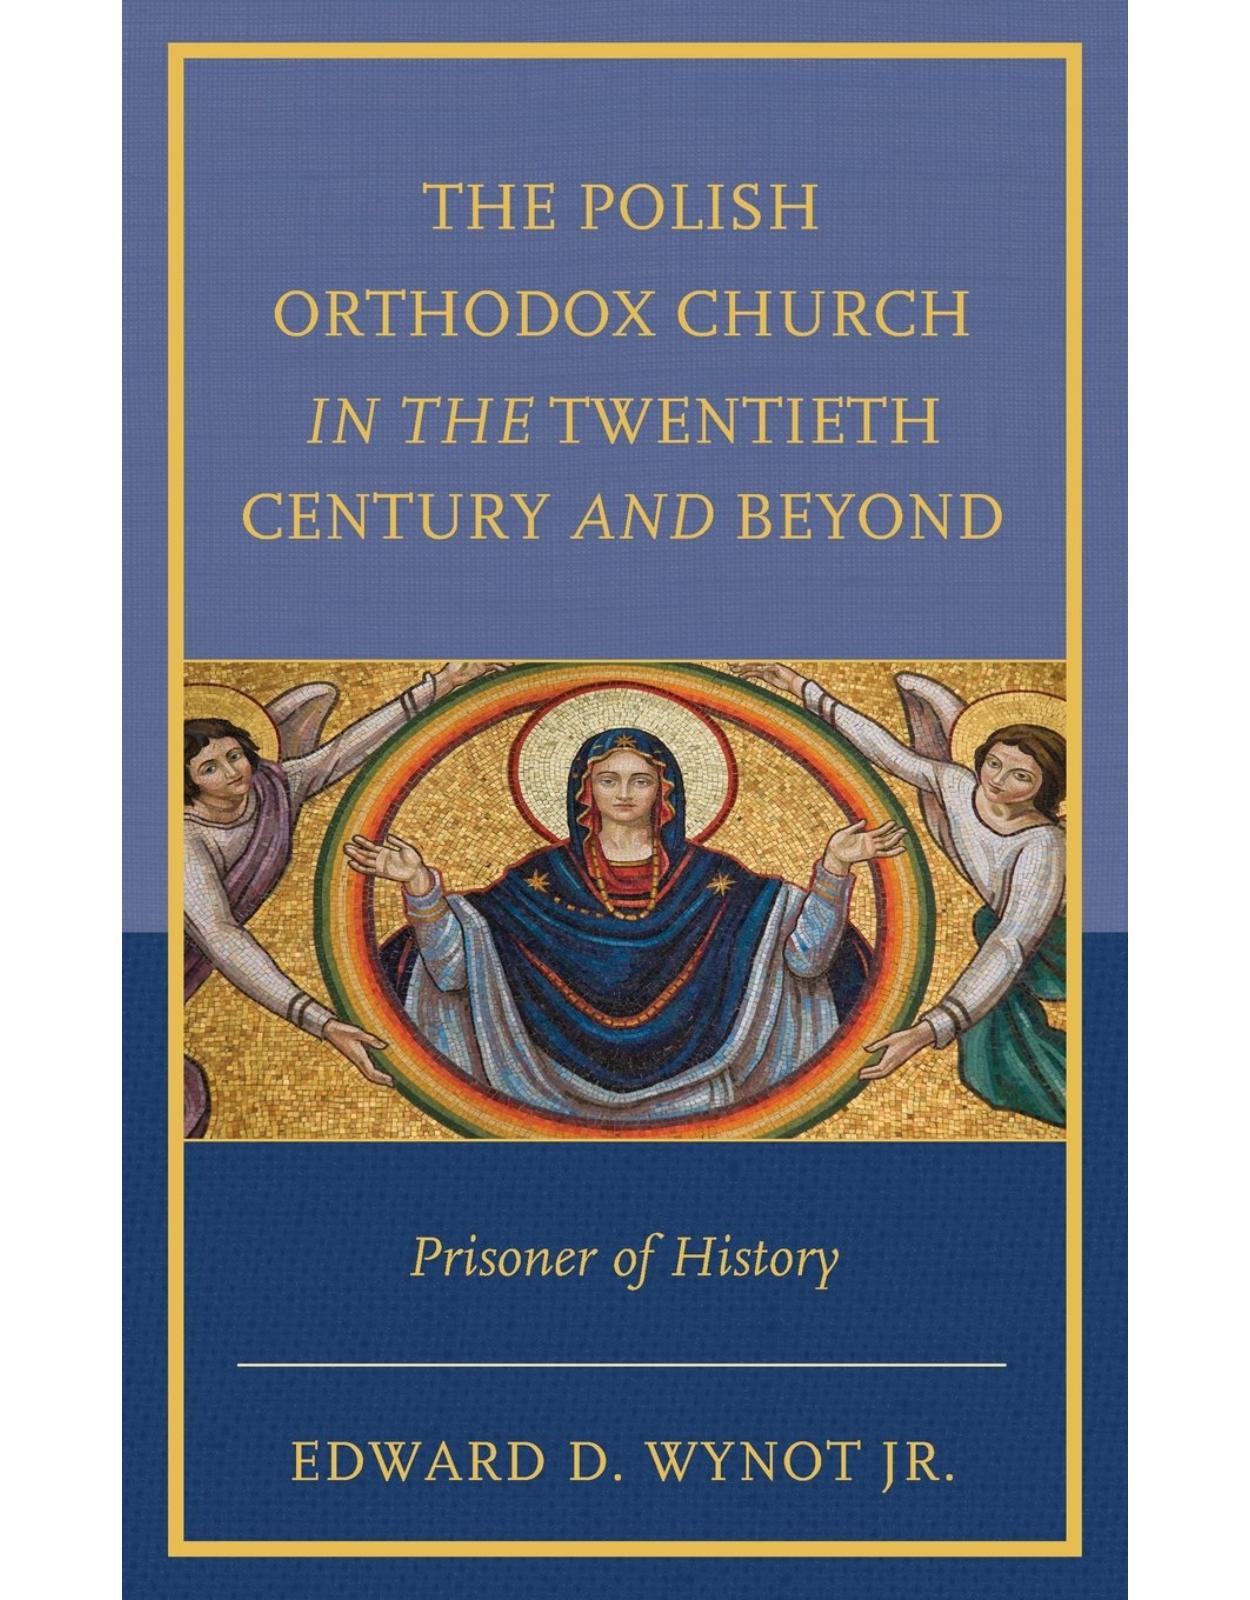 The Polish Orthodox Church in the Twentieth Century and Beyond: Prisoner of History